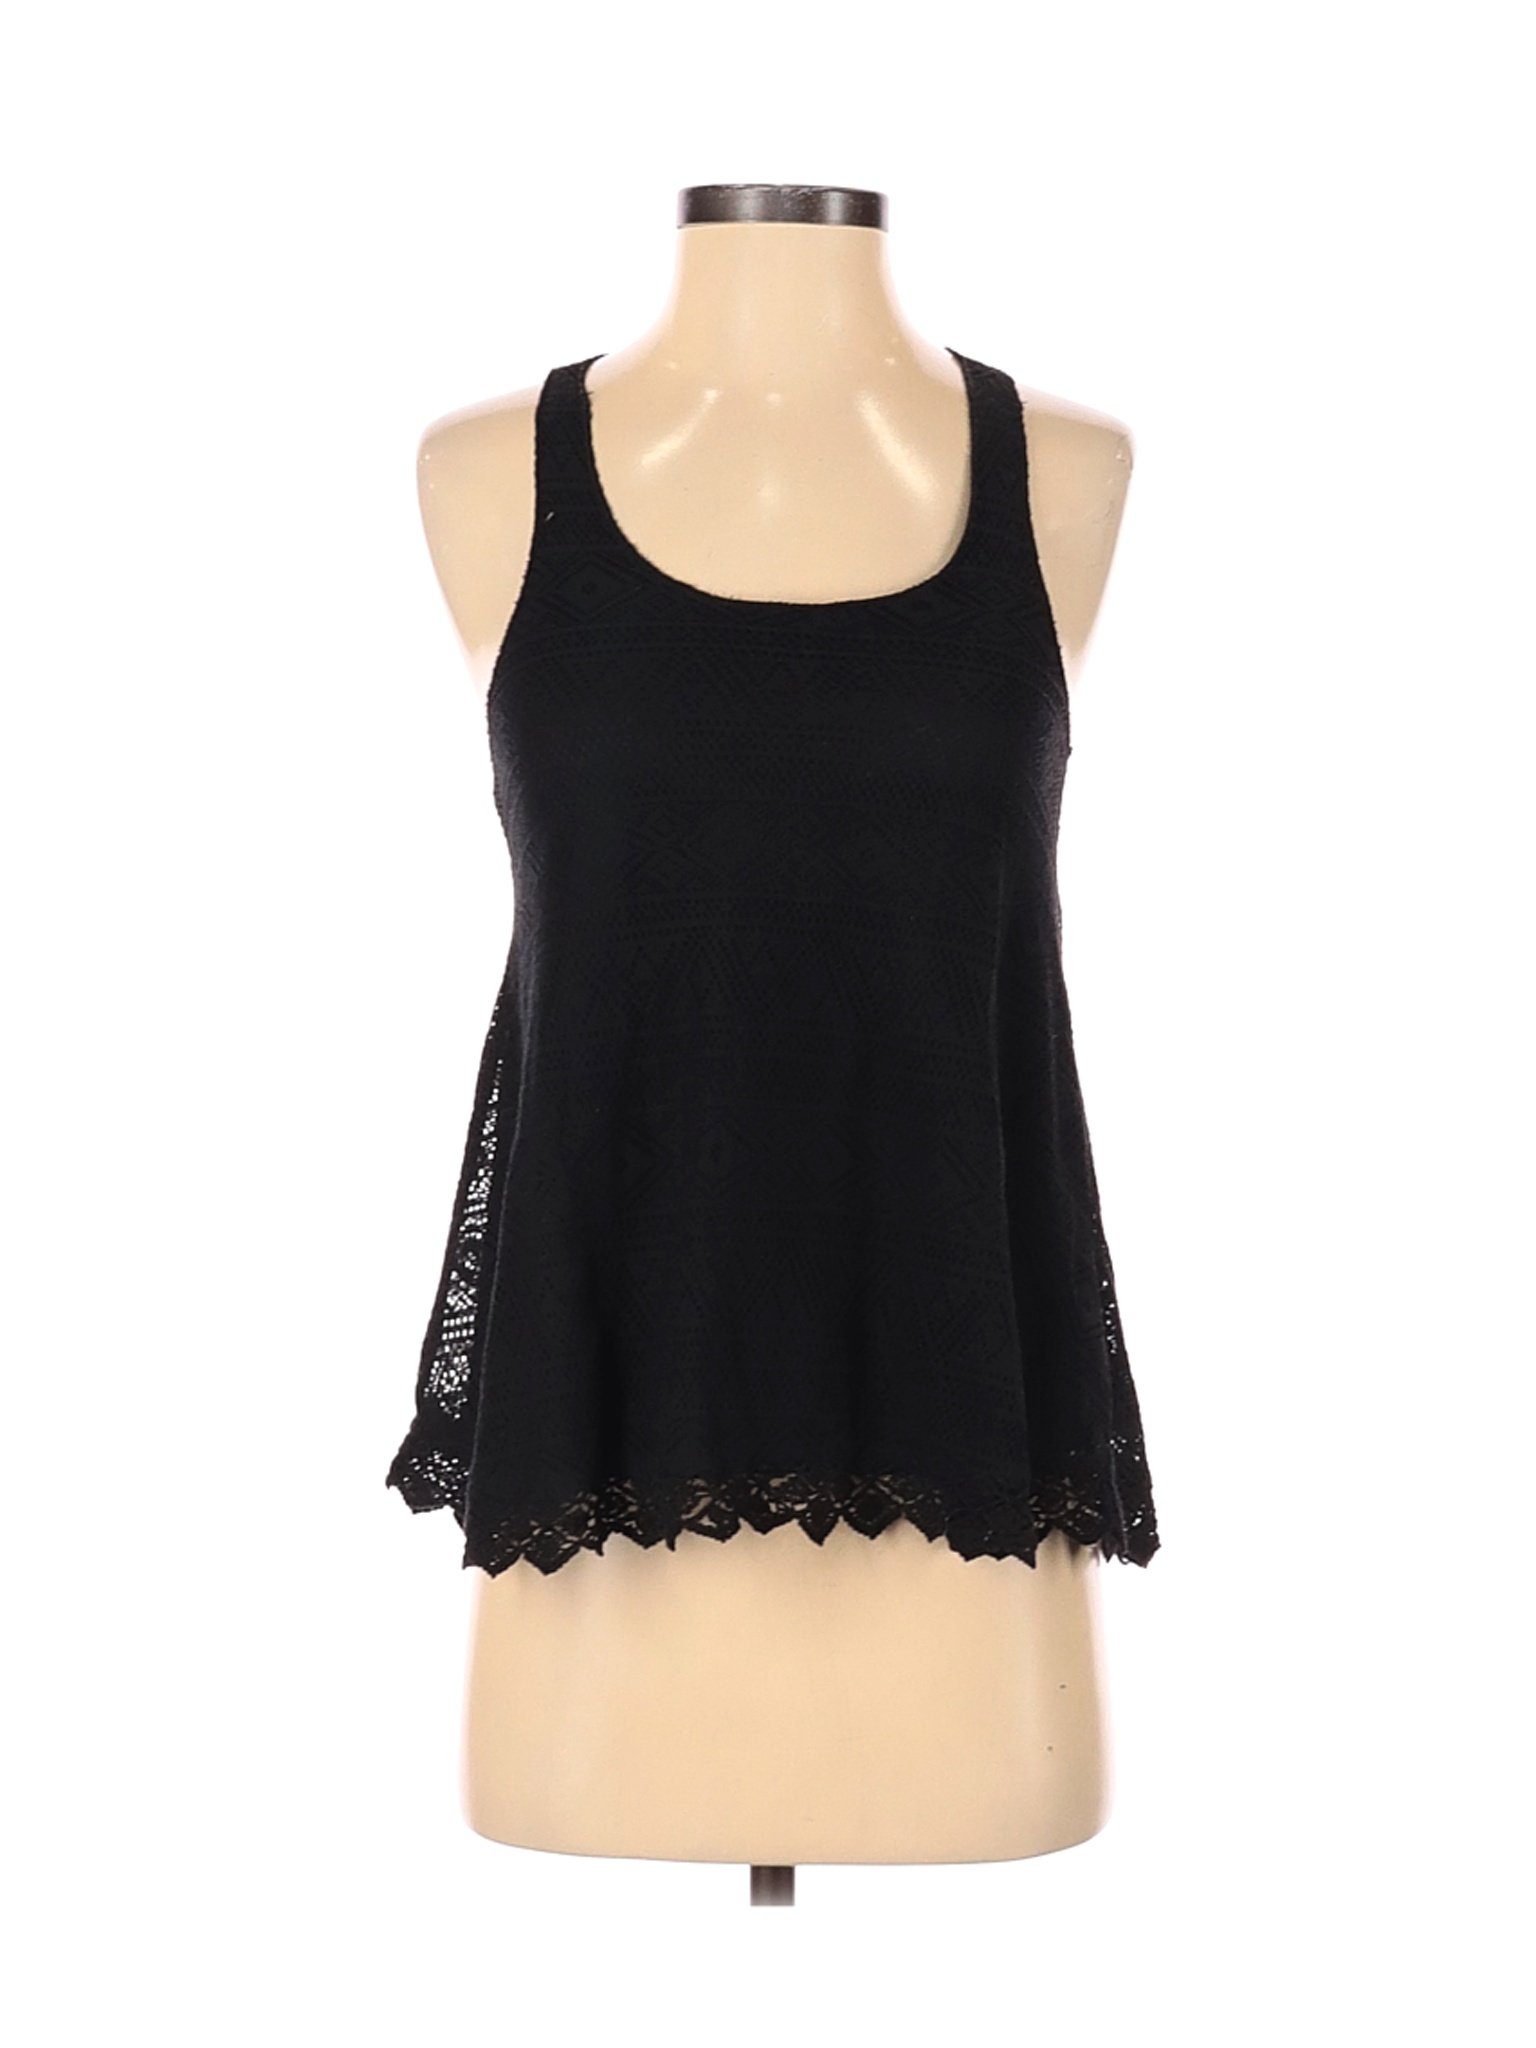 Ocean Drive Clothing Co. Women Black Sleeveless Top S | eBay